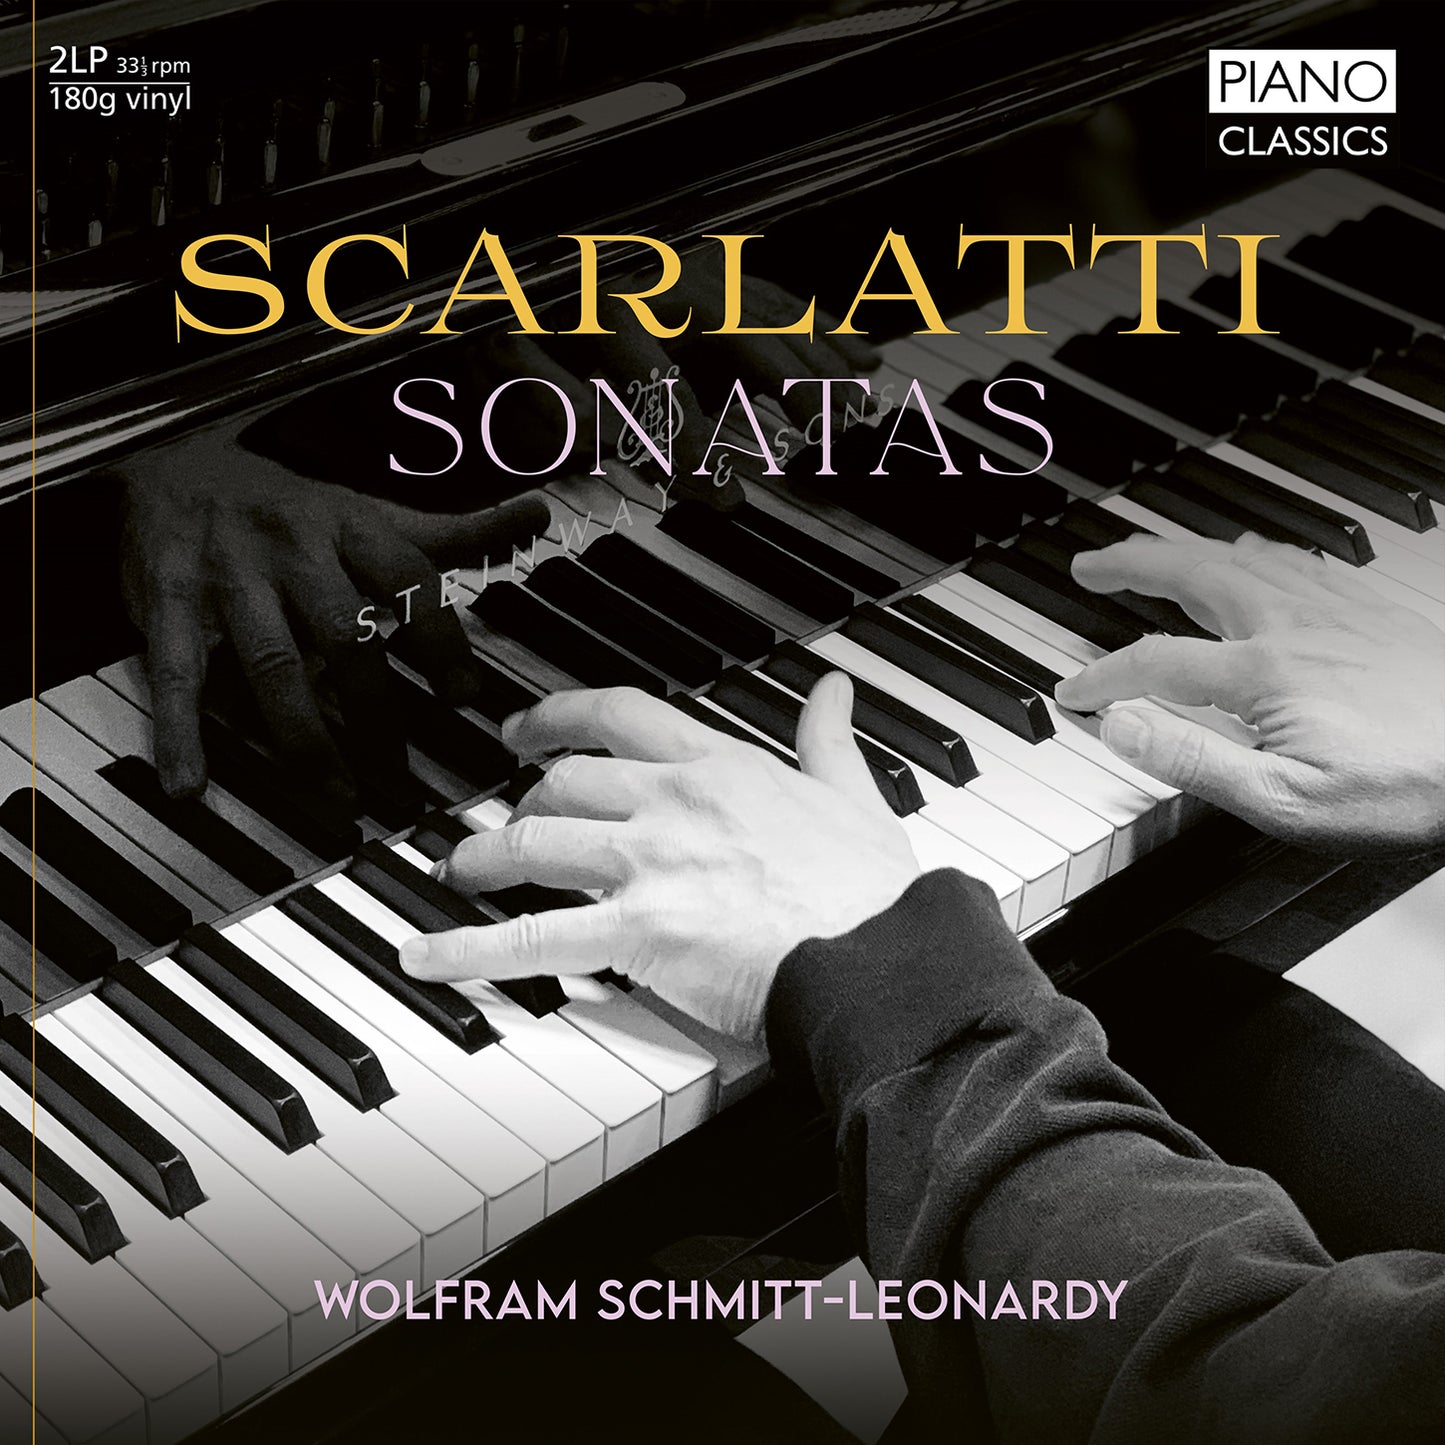 Scarlatti: Sonatas / Wolfram Schmitt-Leonardy (LP)